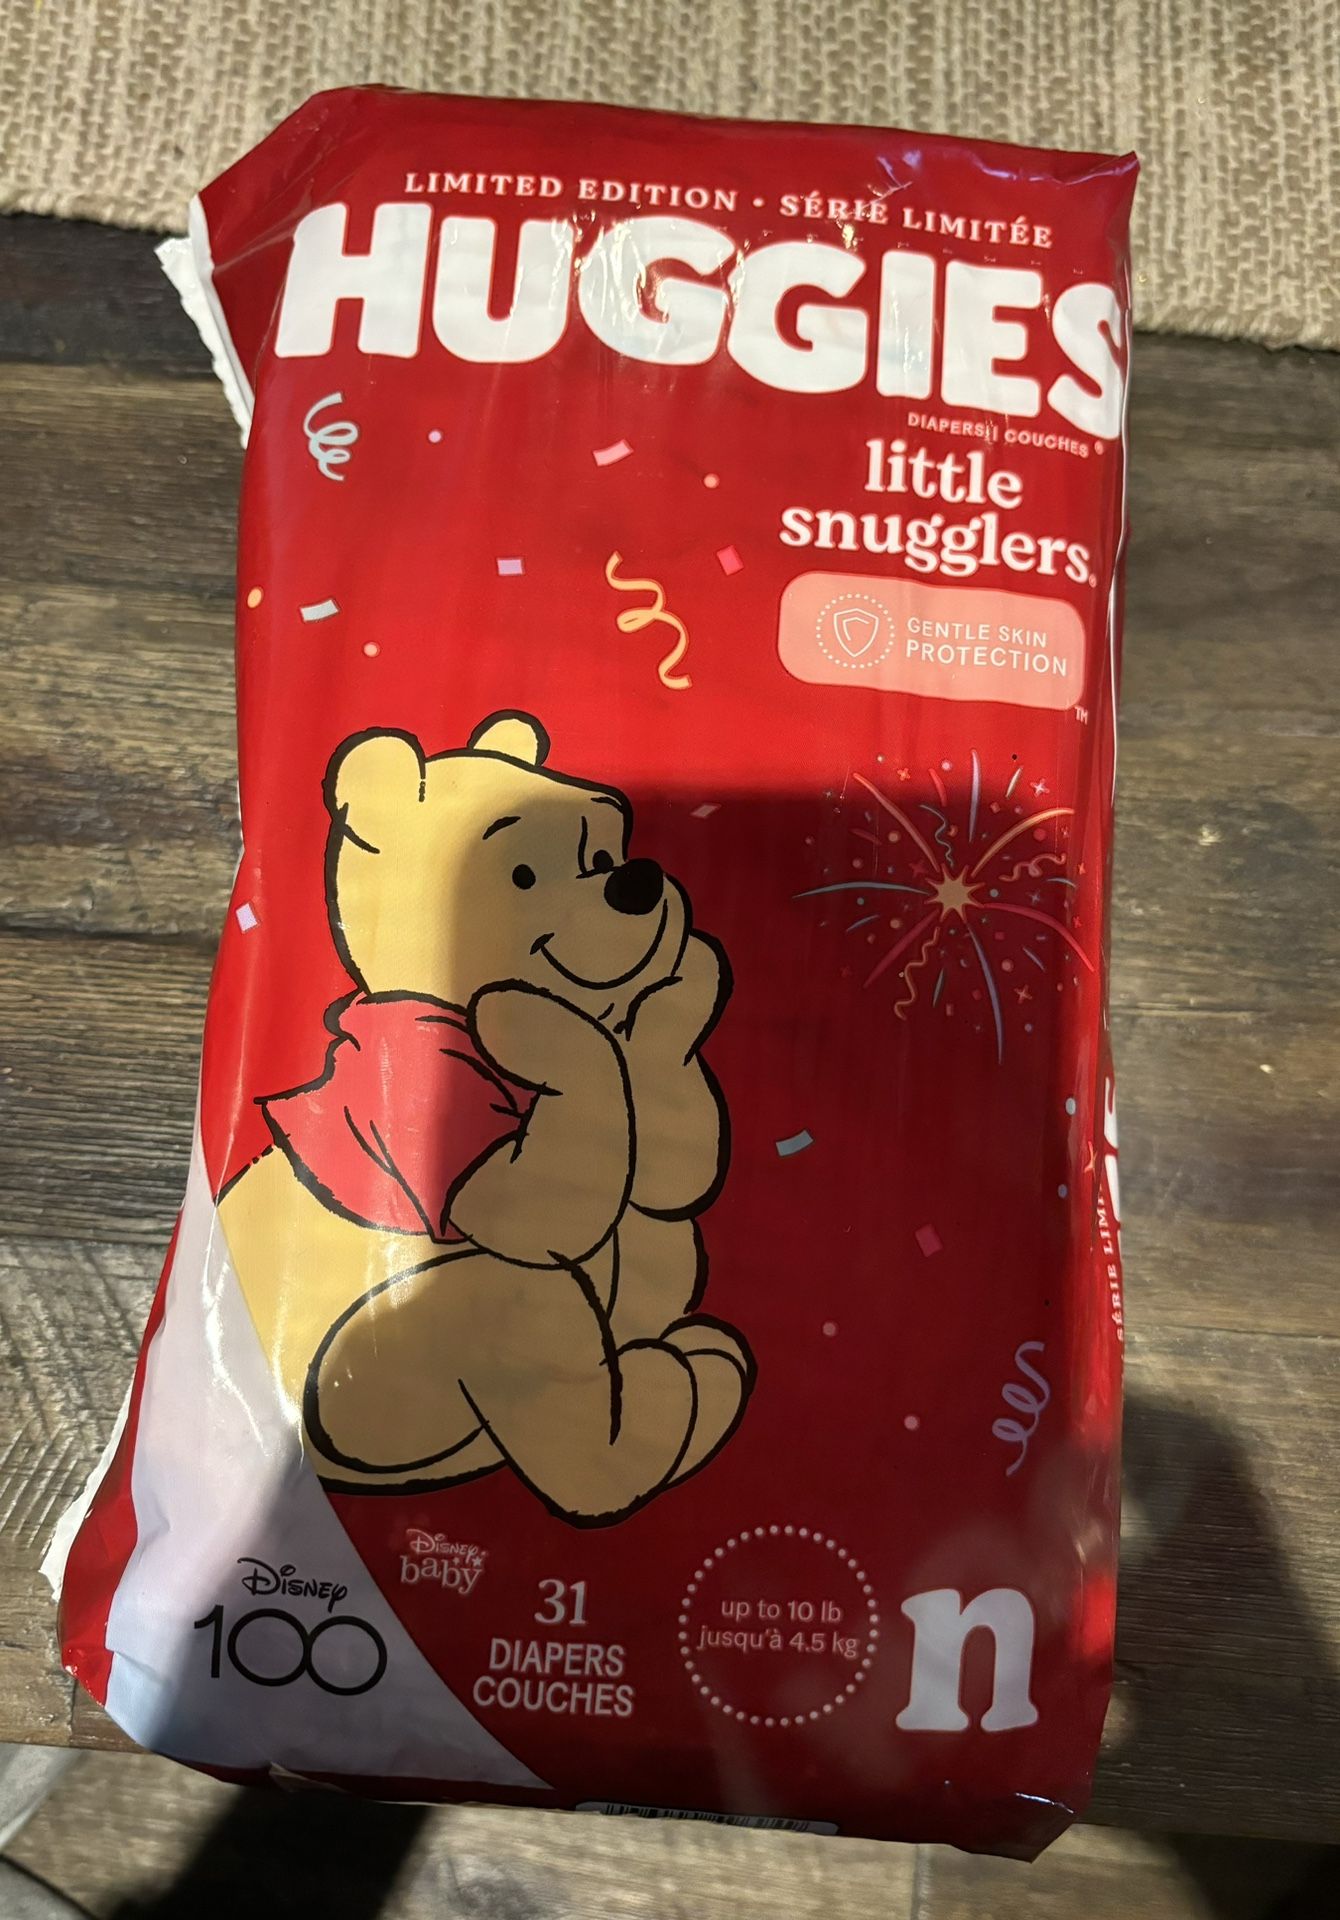 New Pack of Huggies Diapers